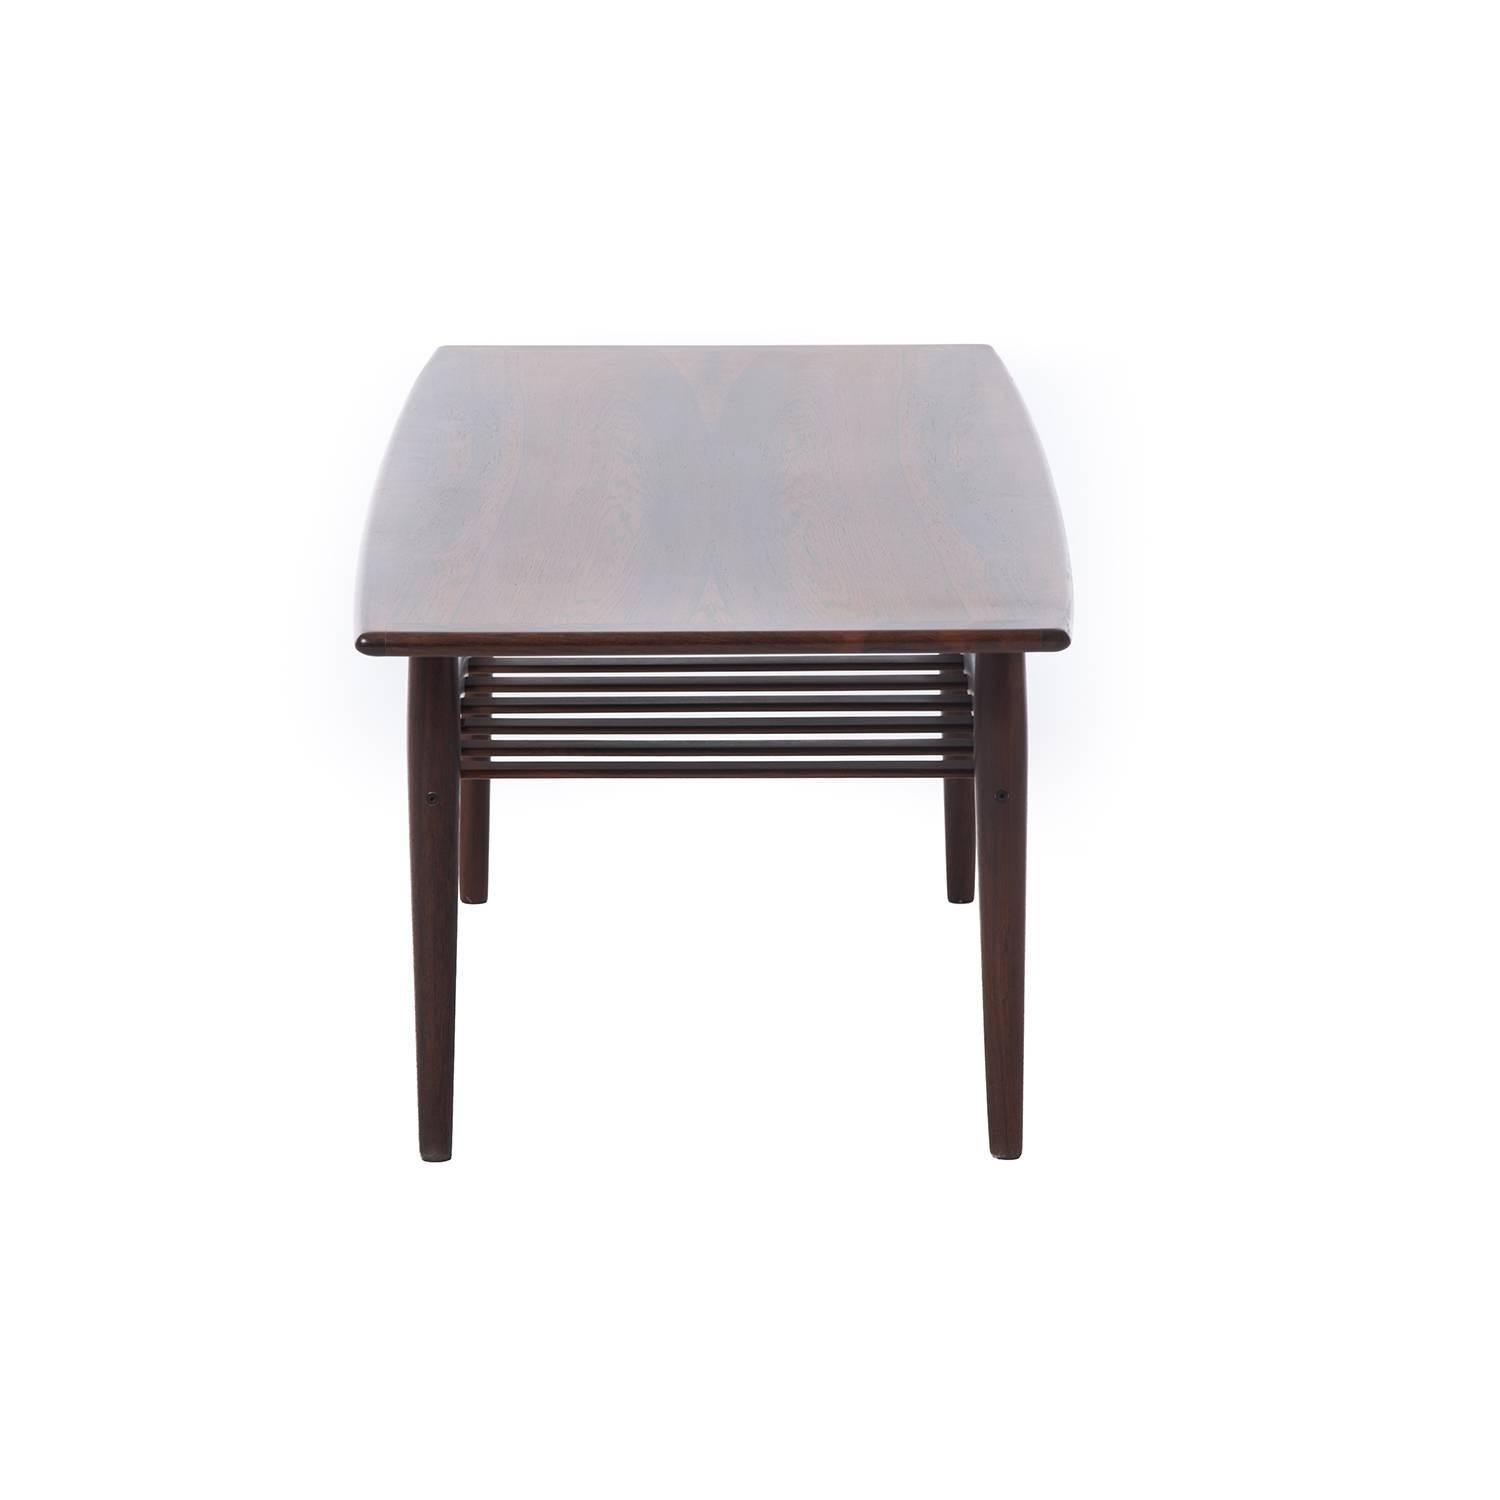 20th Century Danish Modern Rosewood Coffee Table with Shelf